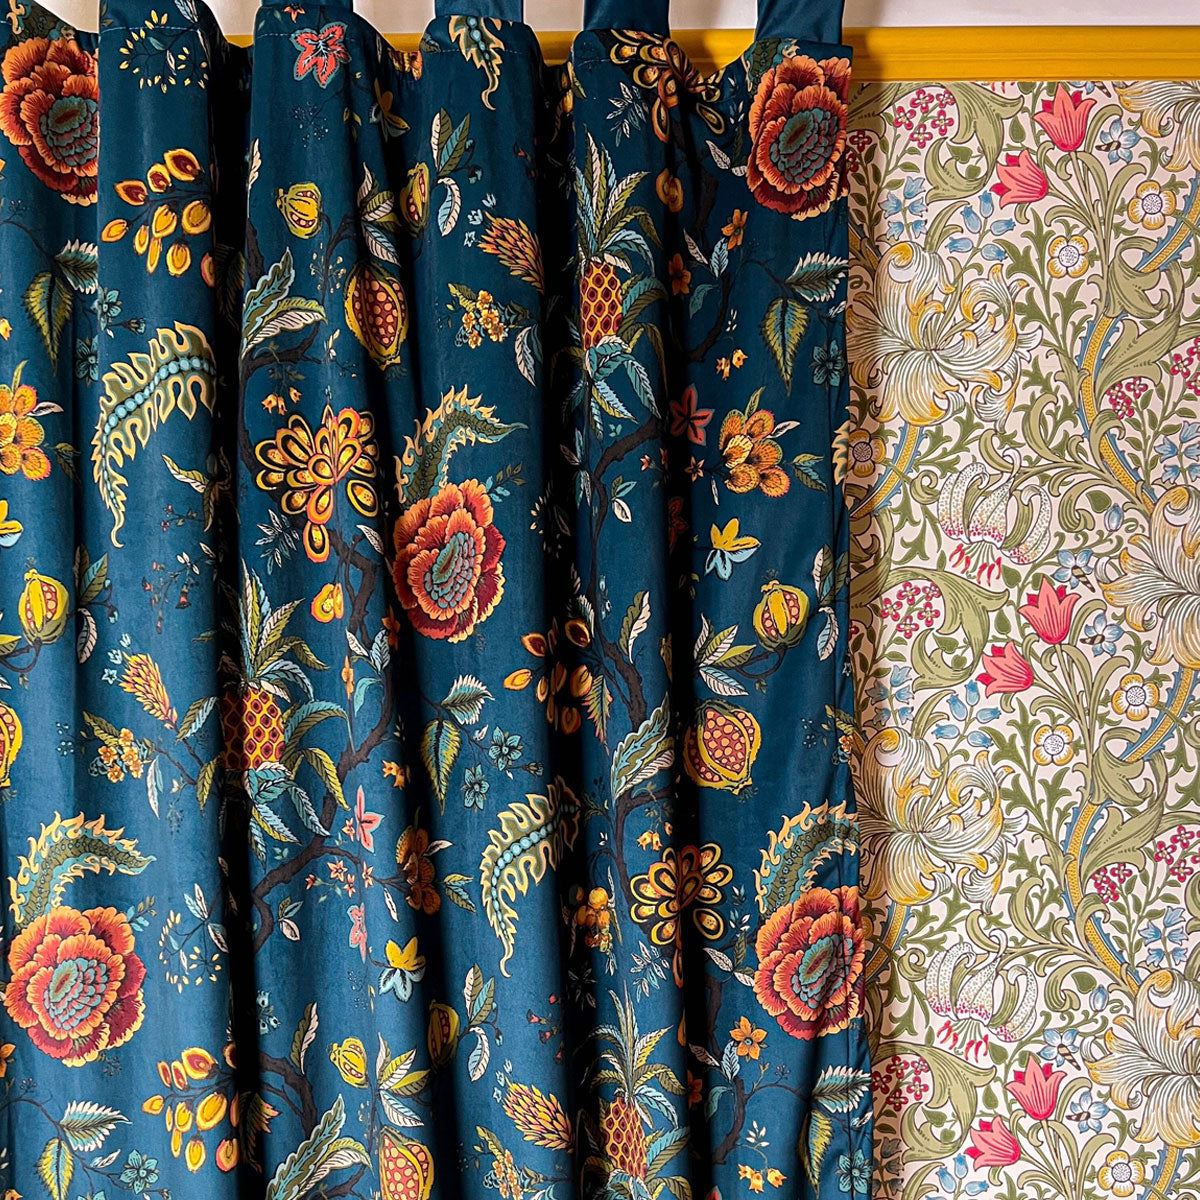 Pompadour Teal Printed Velvet Panel Curtain